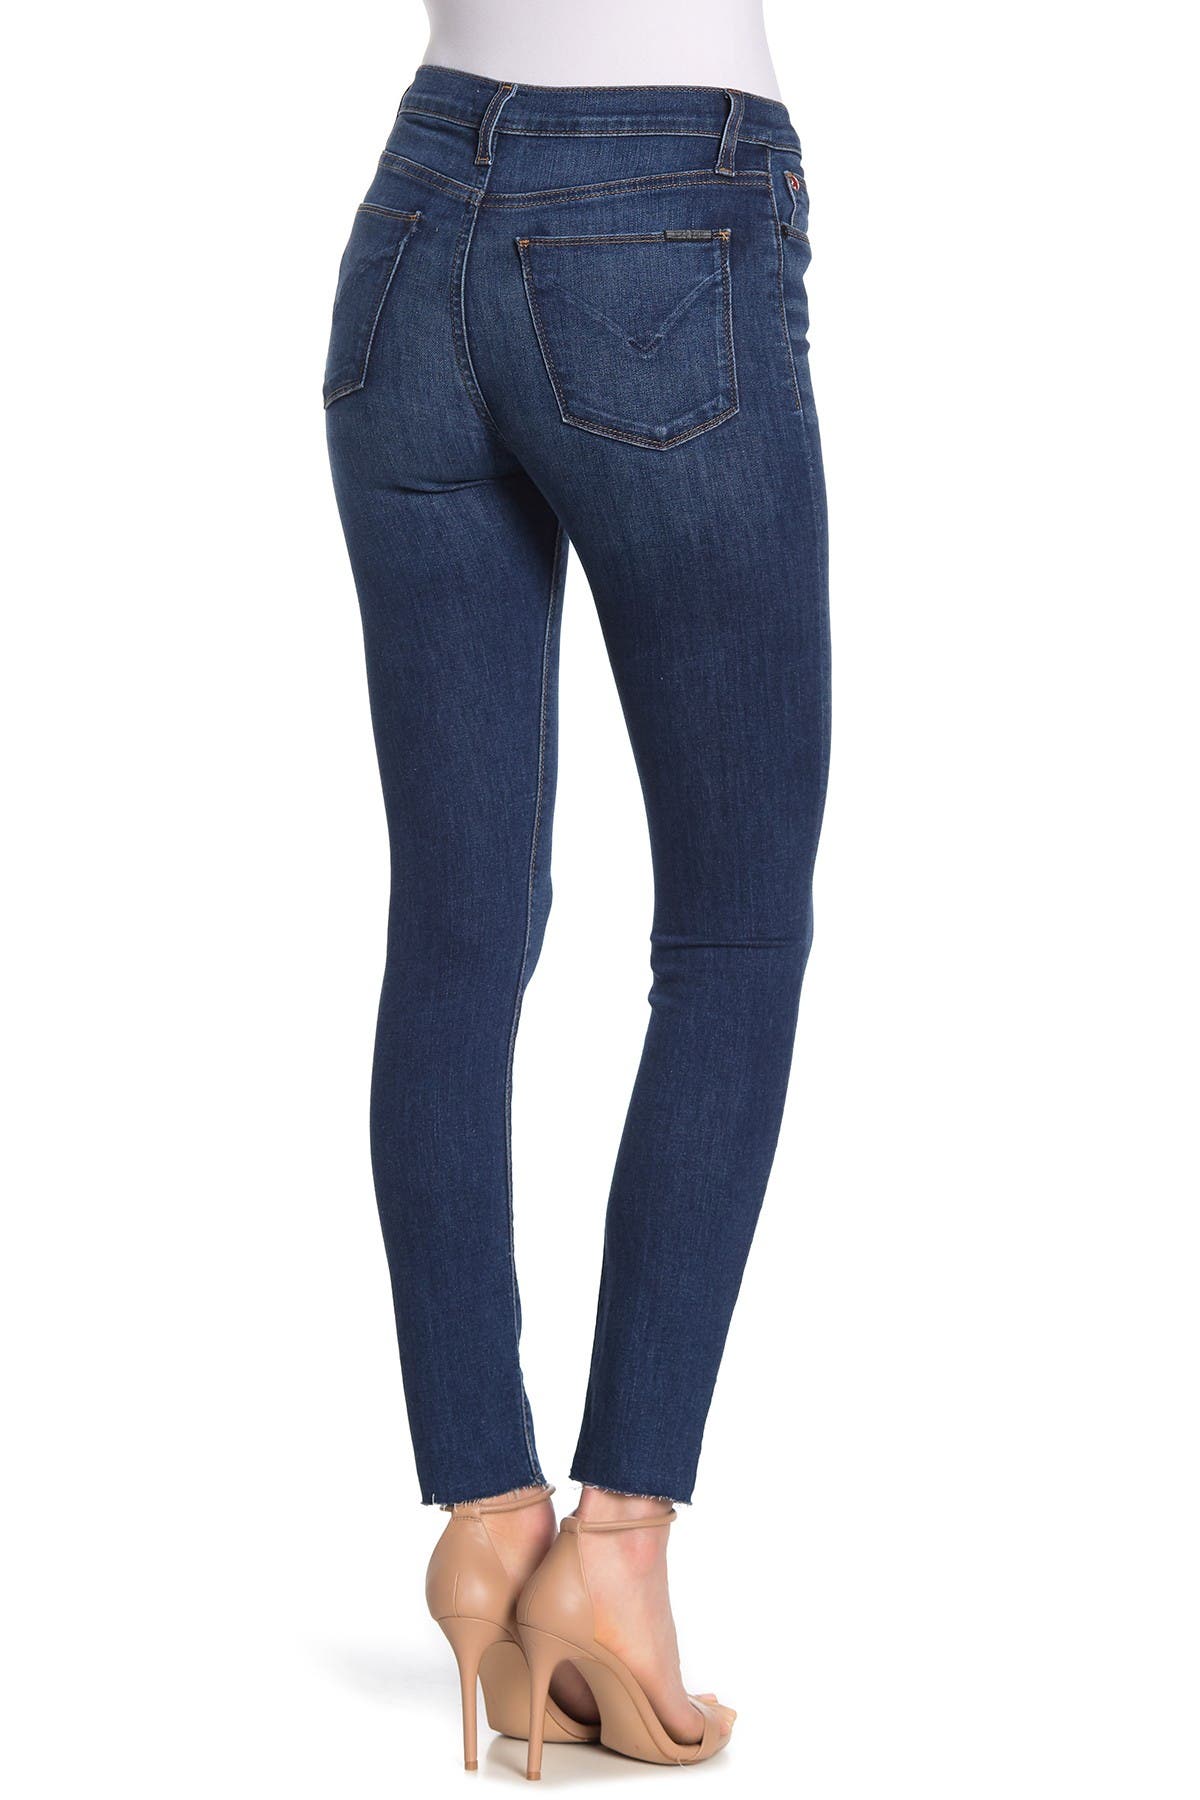 HUDSON Jeans | Blair High Waisted Super Skinny Jeans | HauteLook